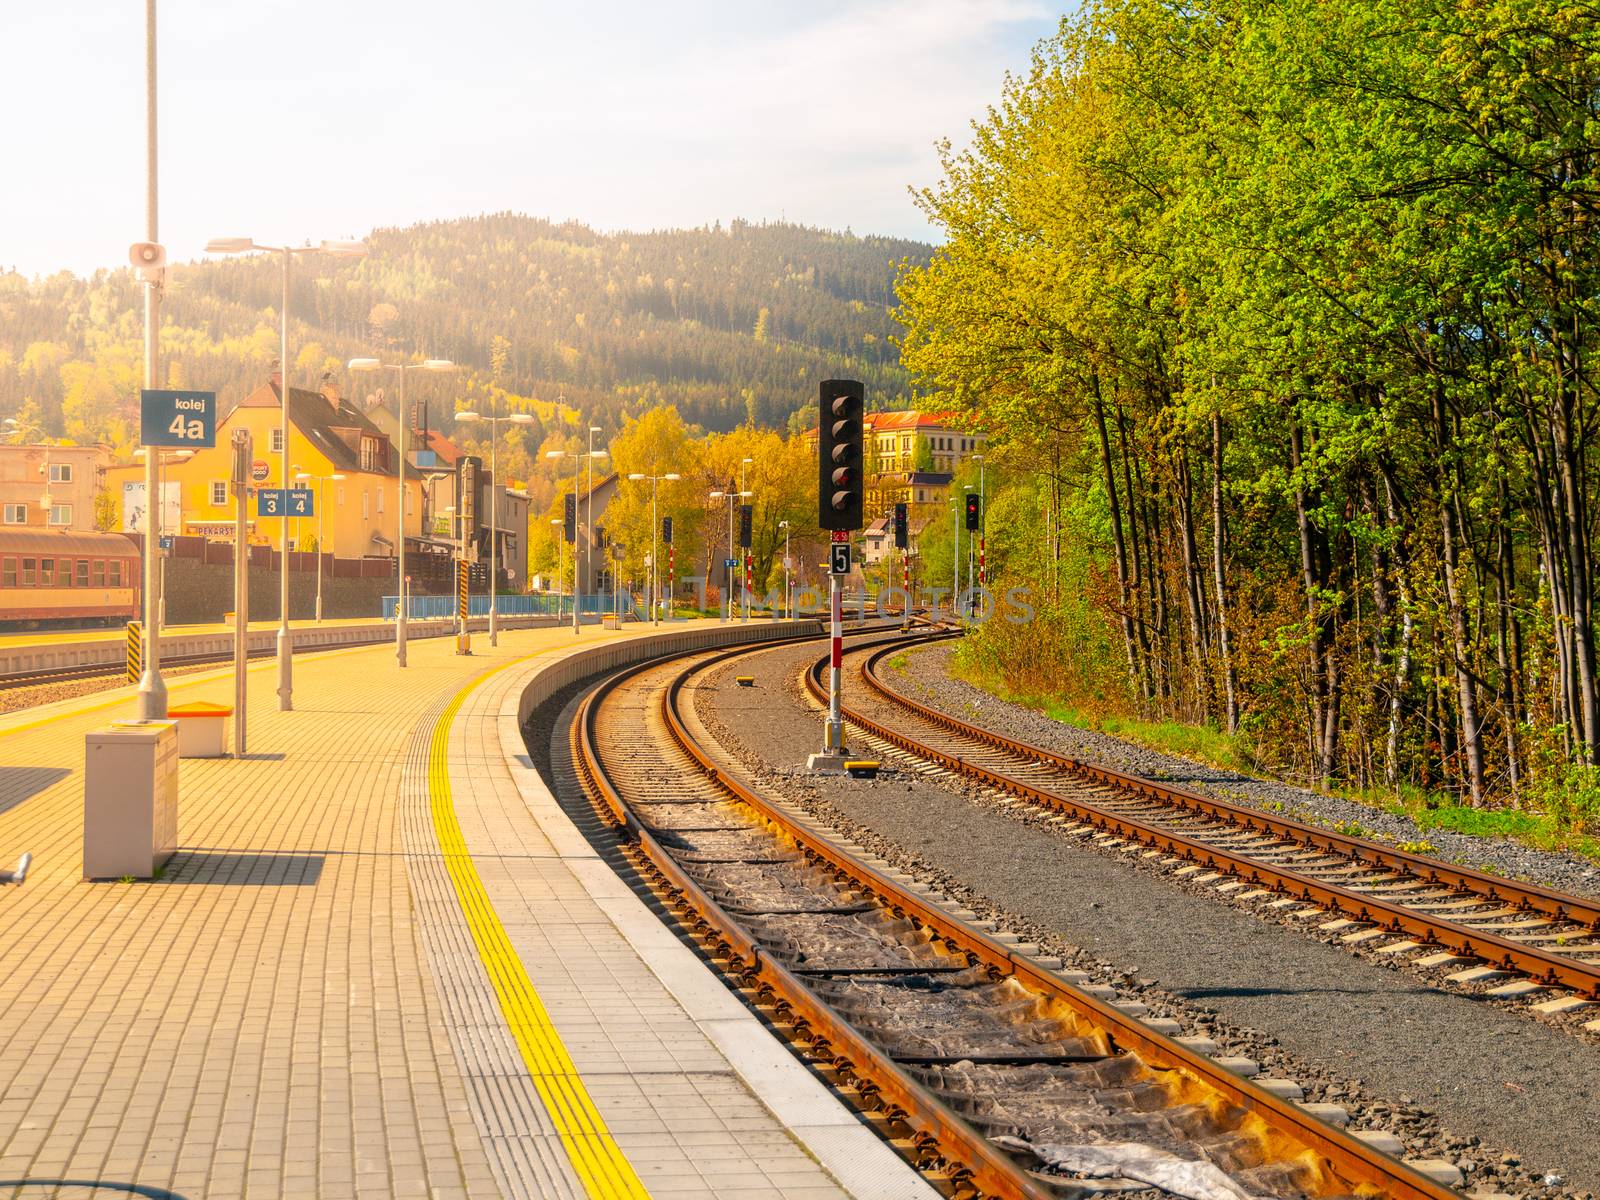 Train station platform in Tanvald, Czech Republic.